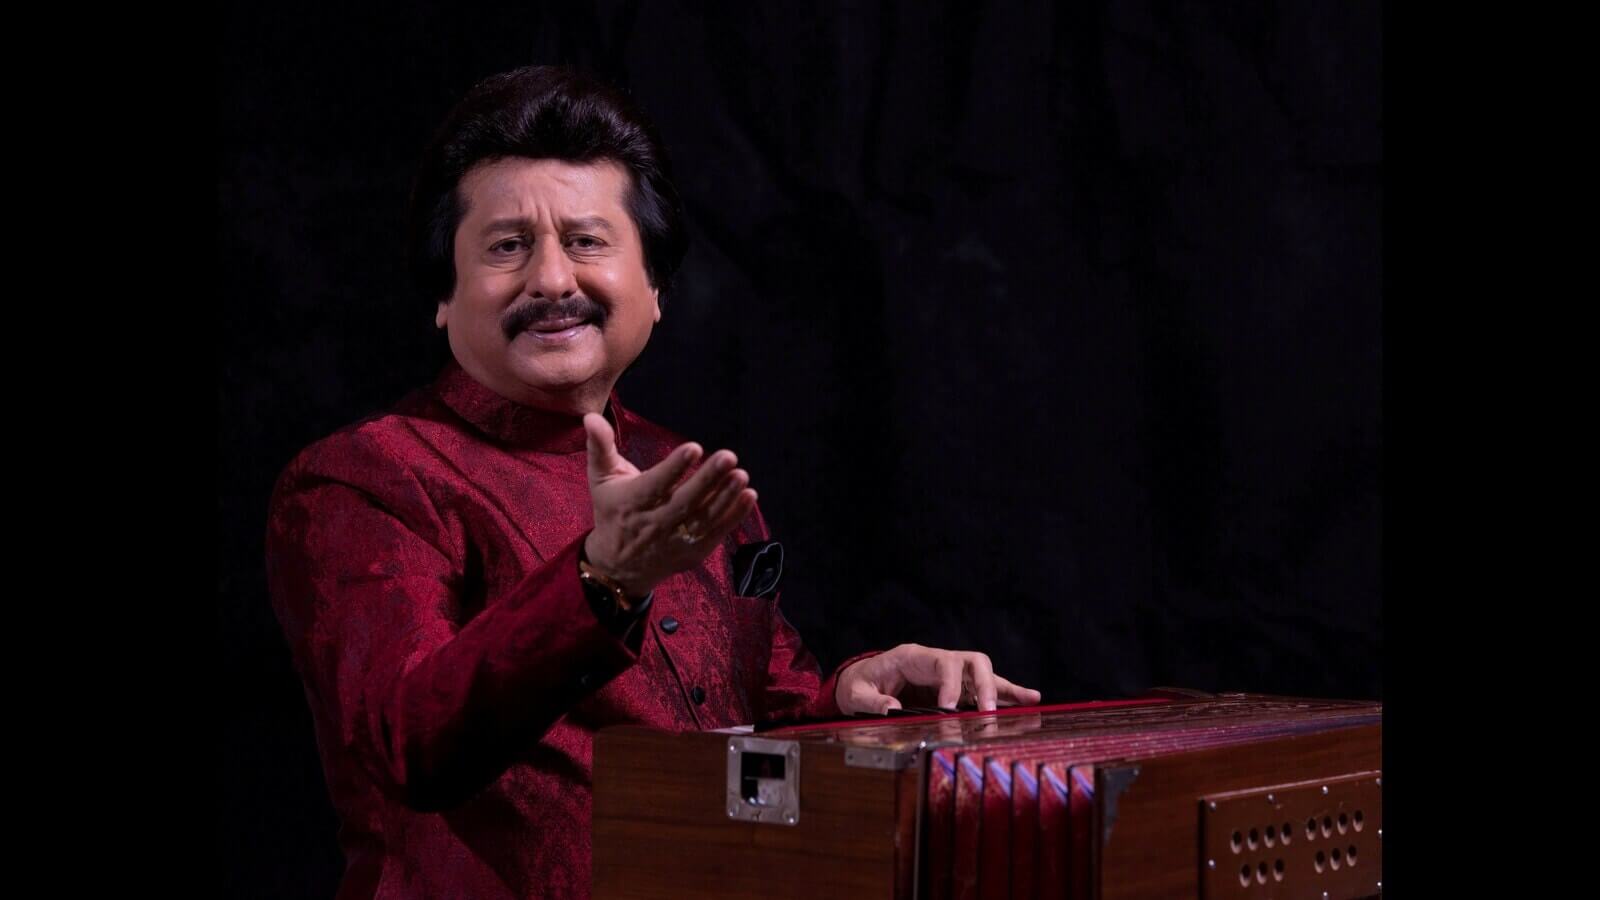 Live concert of Ghazal Maestro Pankaj Udhas on Sept 30 in Hyderabad